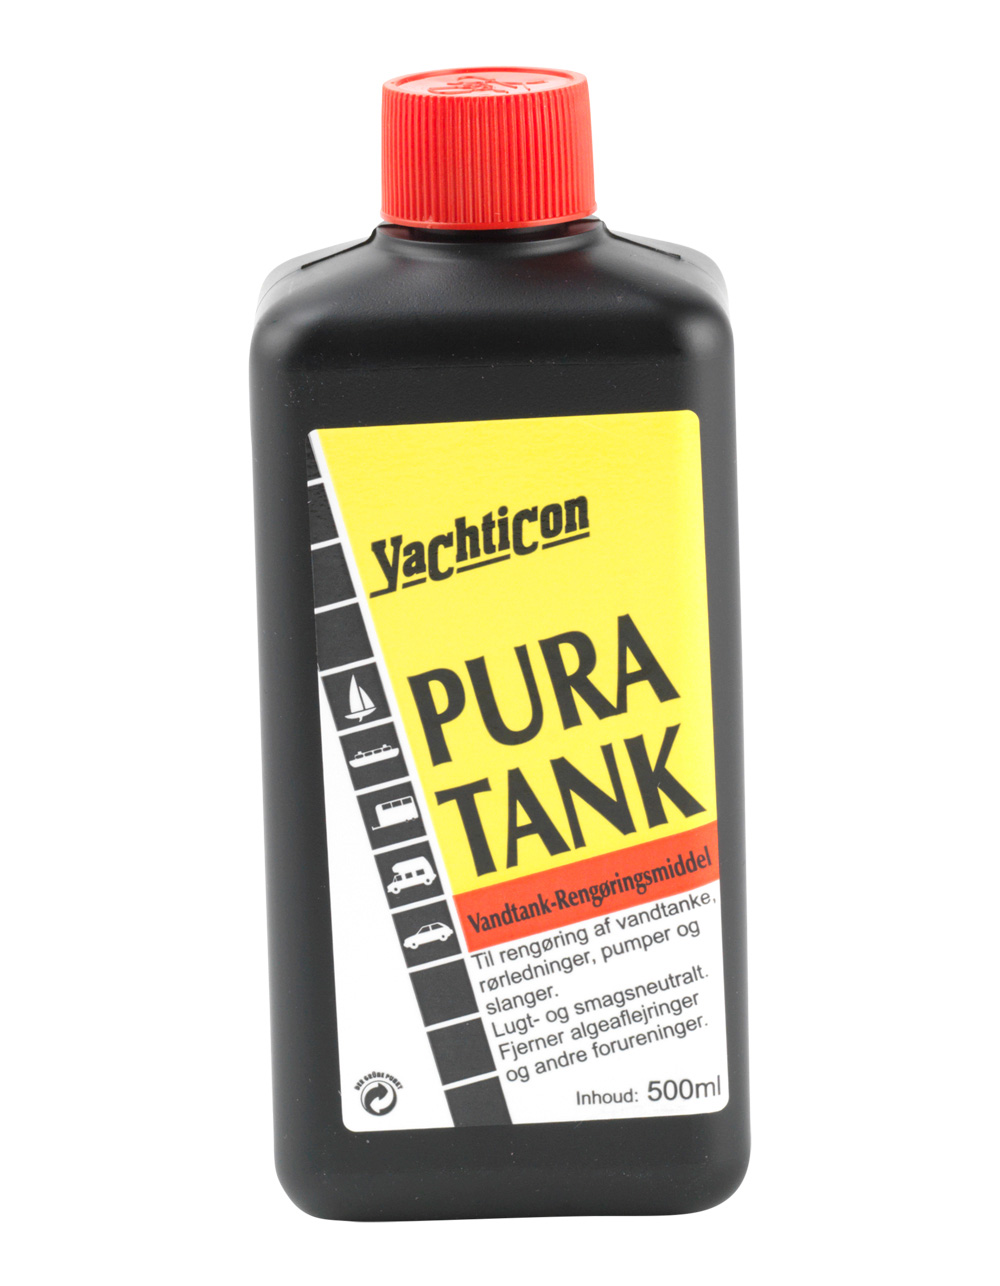 Pura Tank à 500 ml.